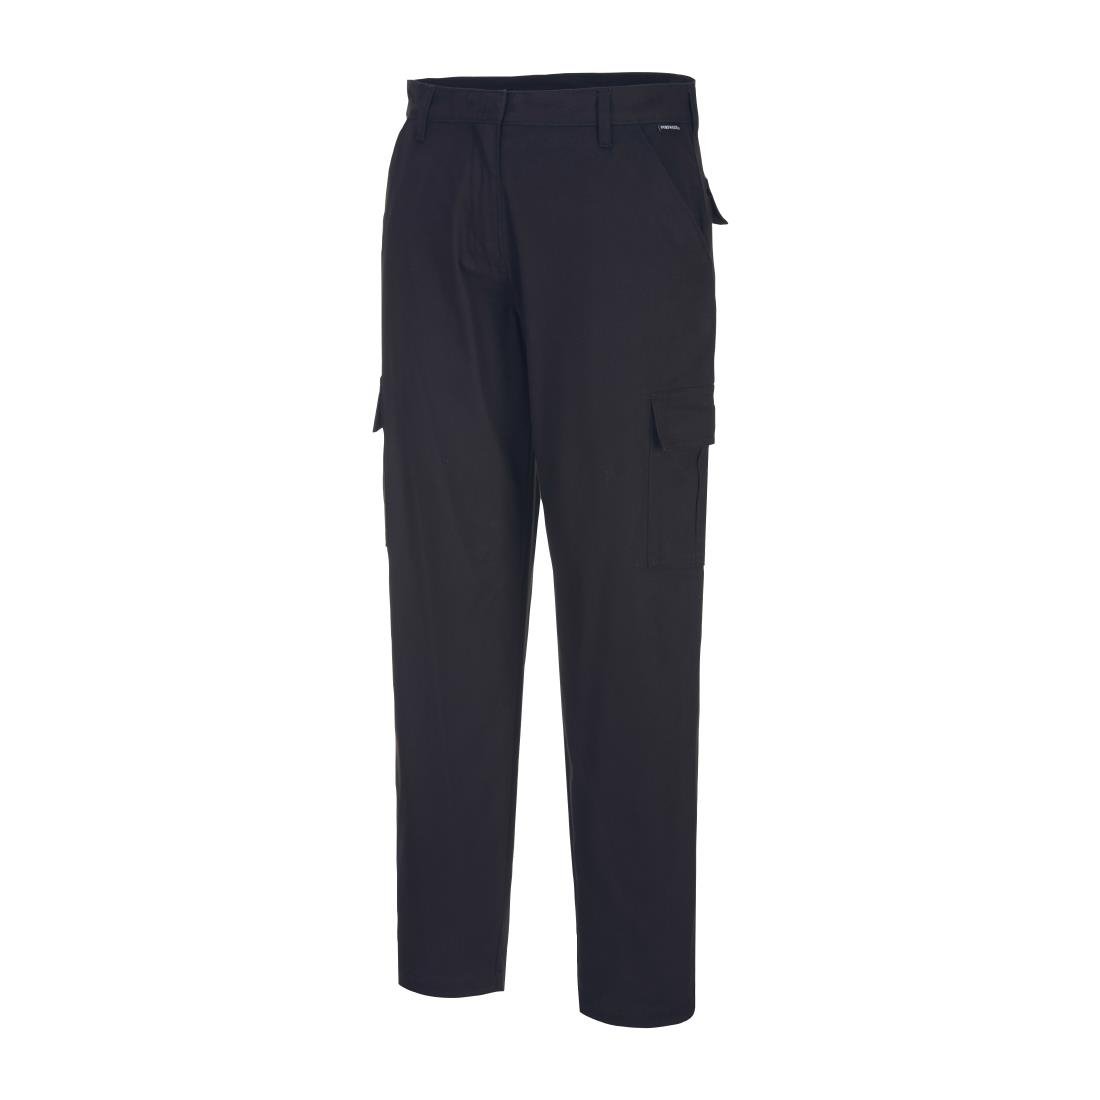 BA088-12 Portwest Eco Women's Stretch Cargo Trousers Black Size 12